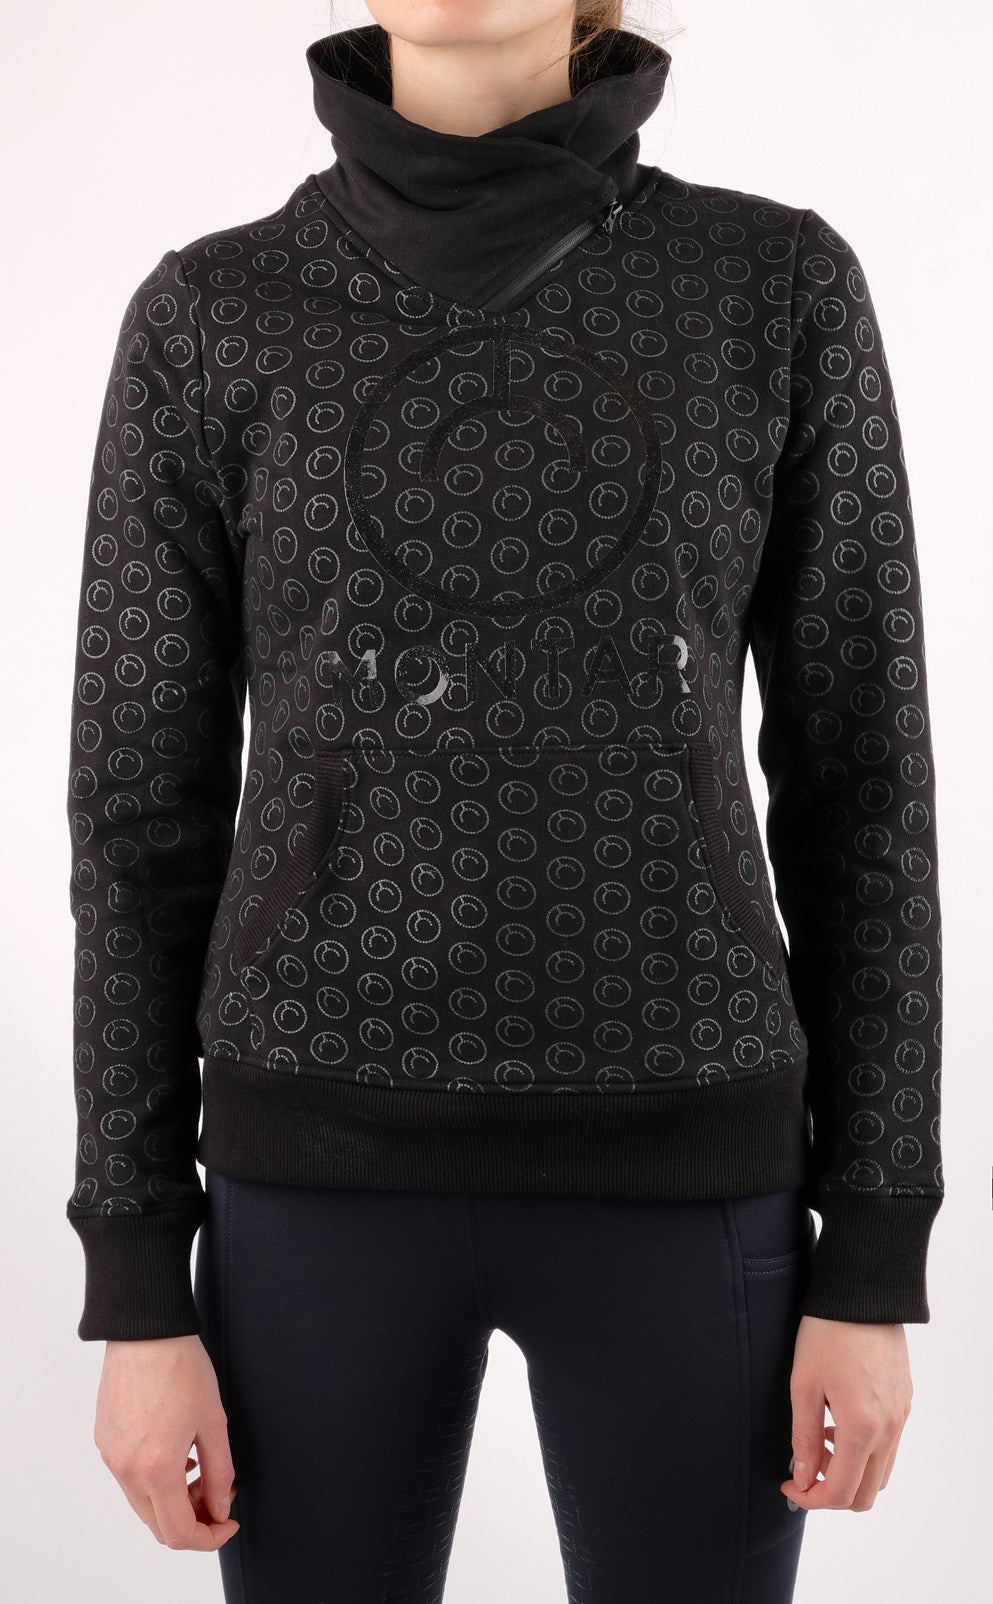 Sofie Sweatshirt with side neck zipper - Black